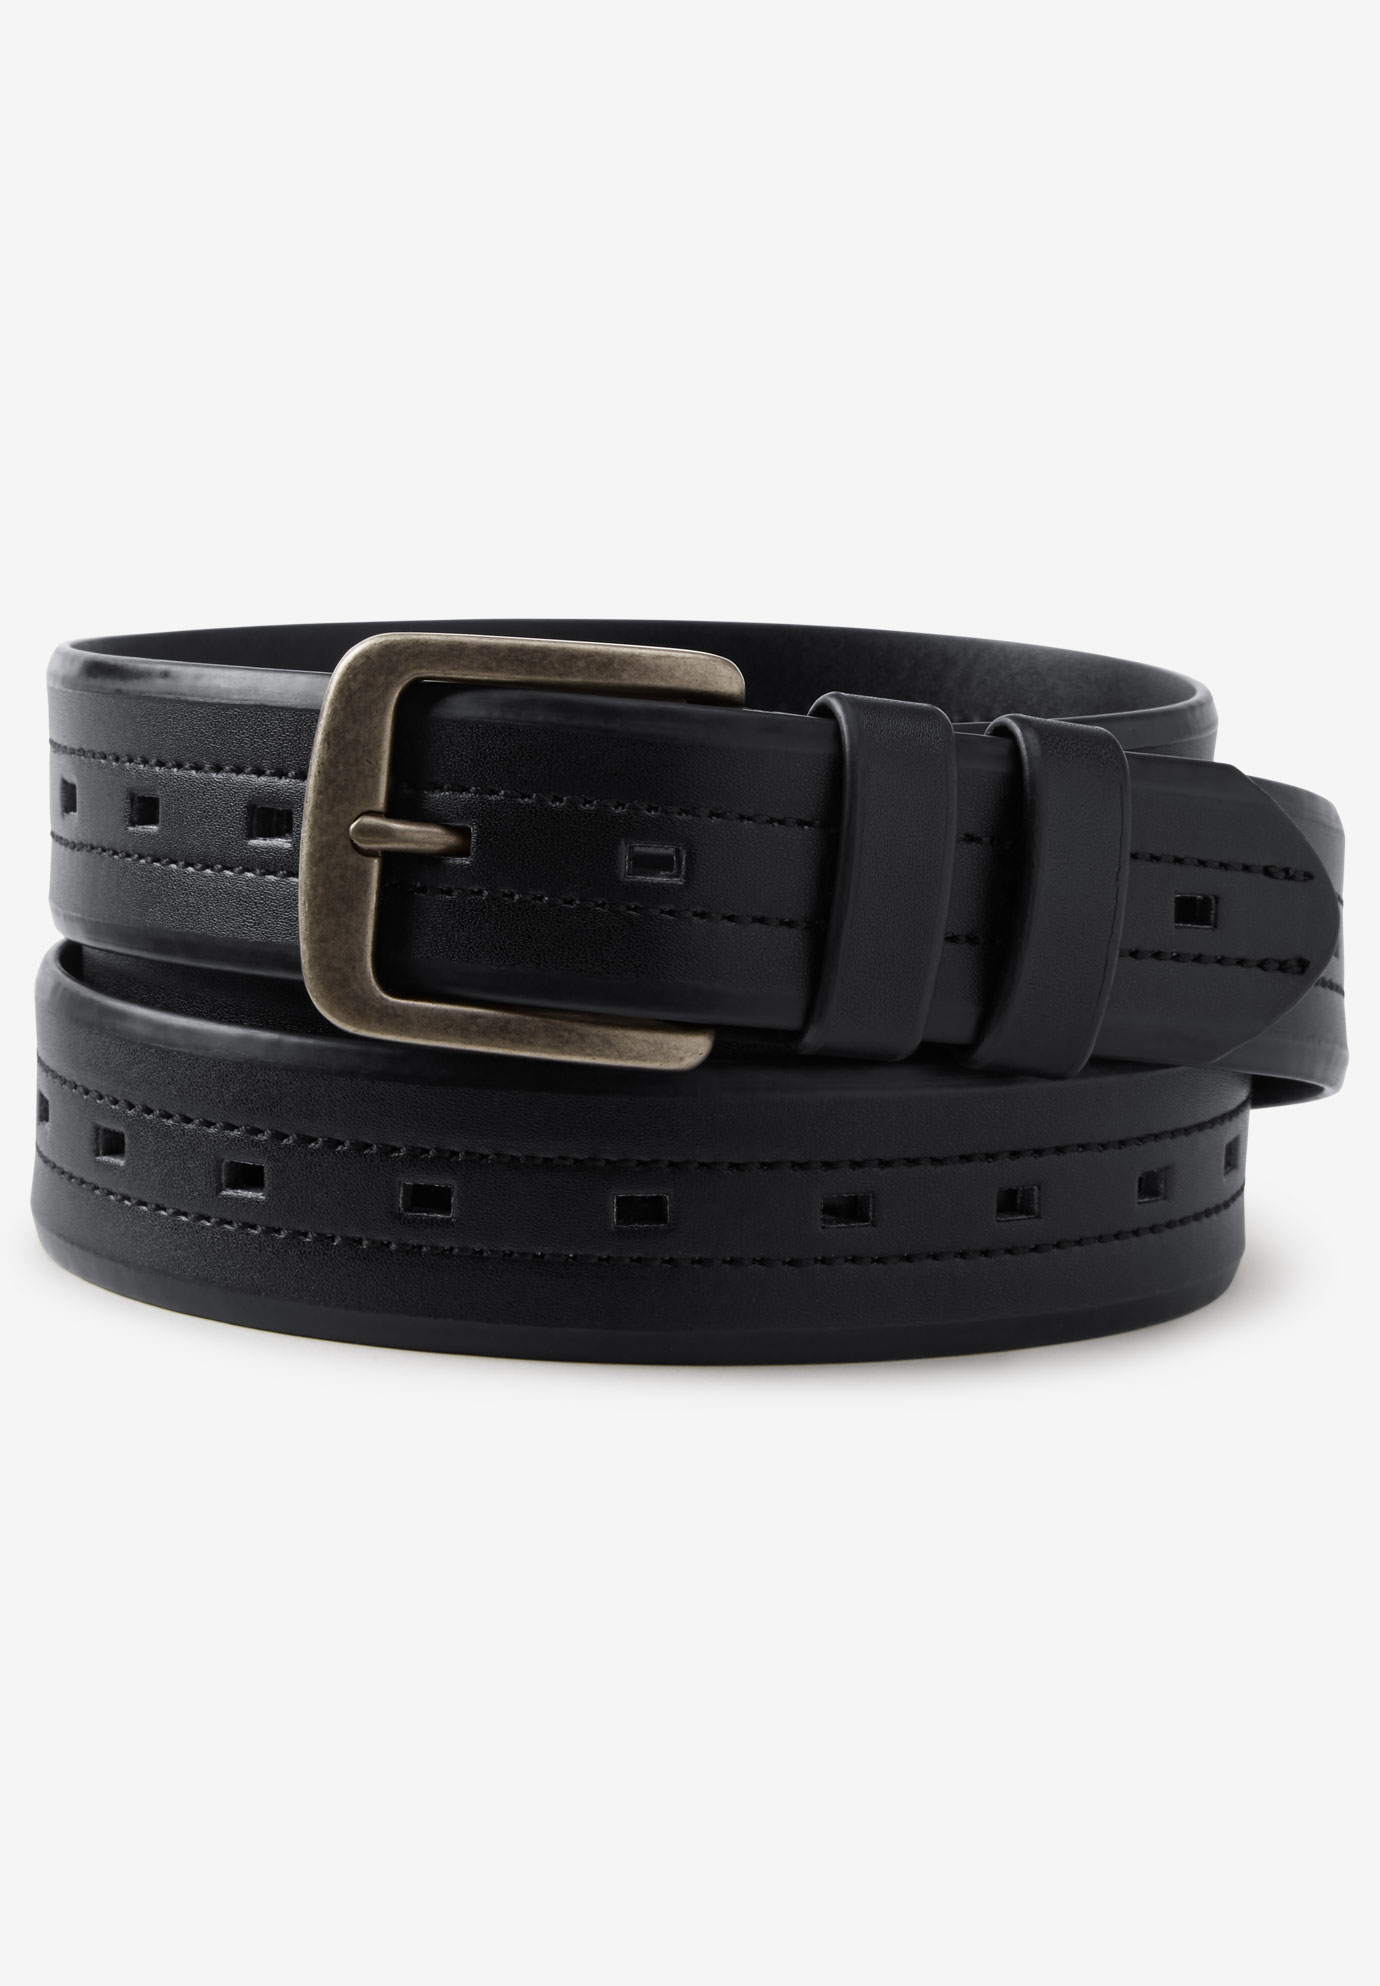 Stitched Leather Belt | King Size